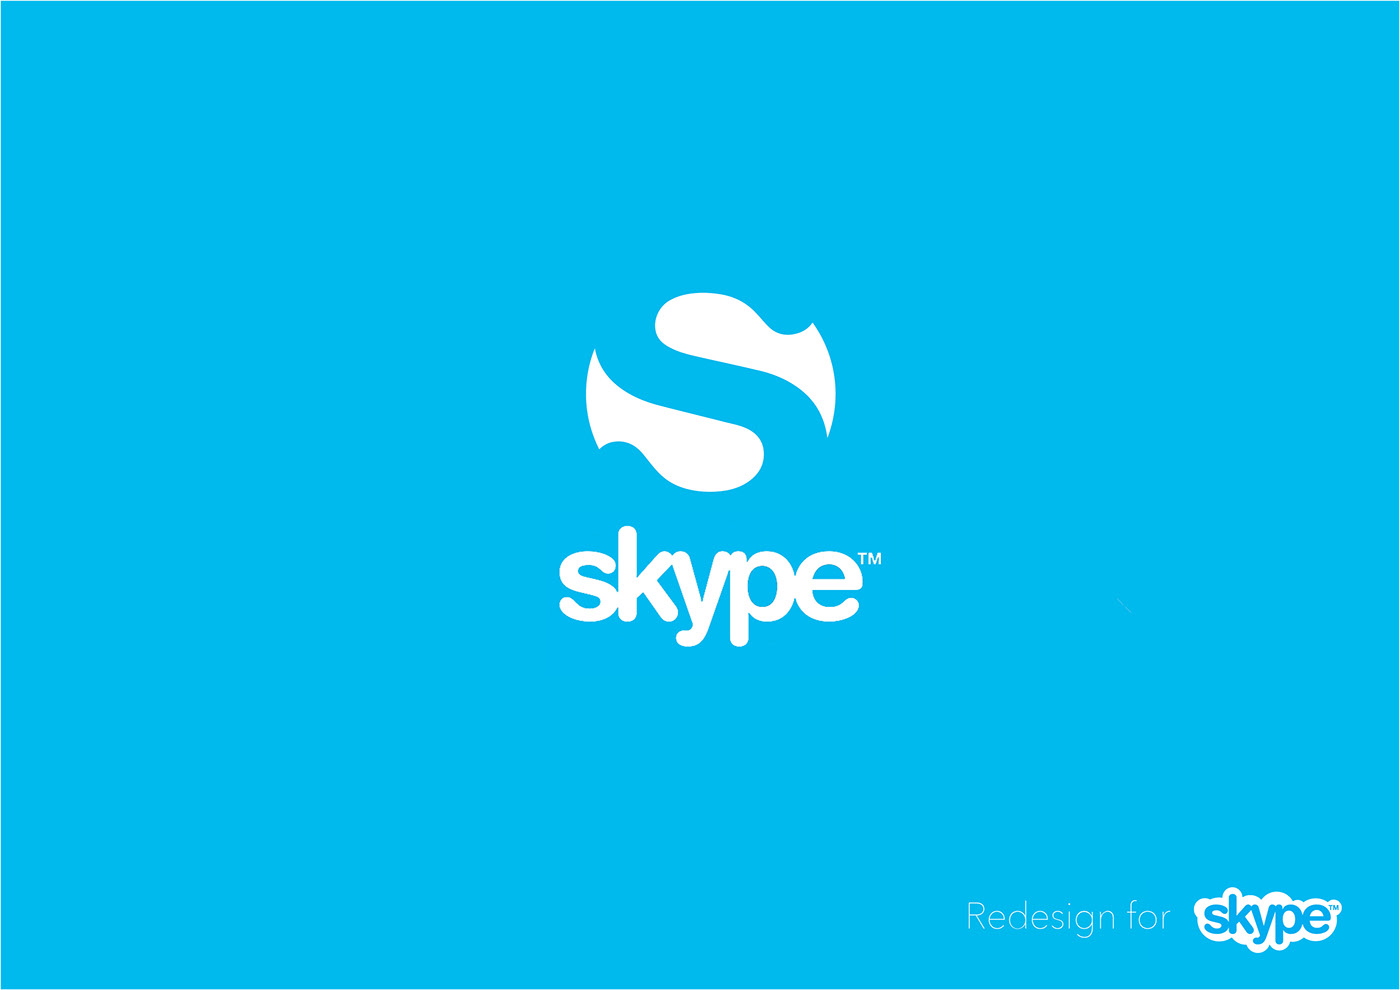 logo Collection redesign Logotype Corporate Design akademie u5 Minimalism famous brands simple vimeo Skype google eBay big